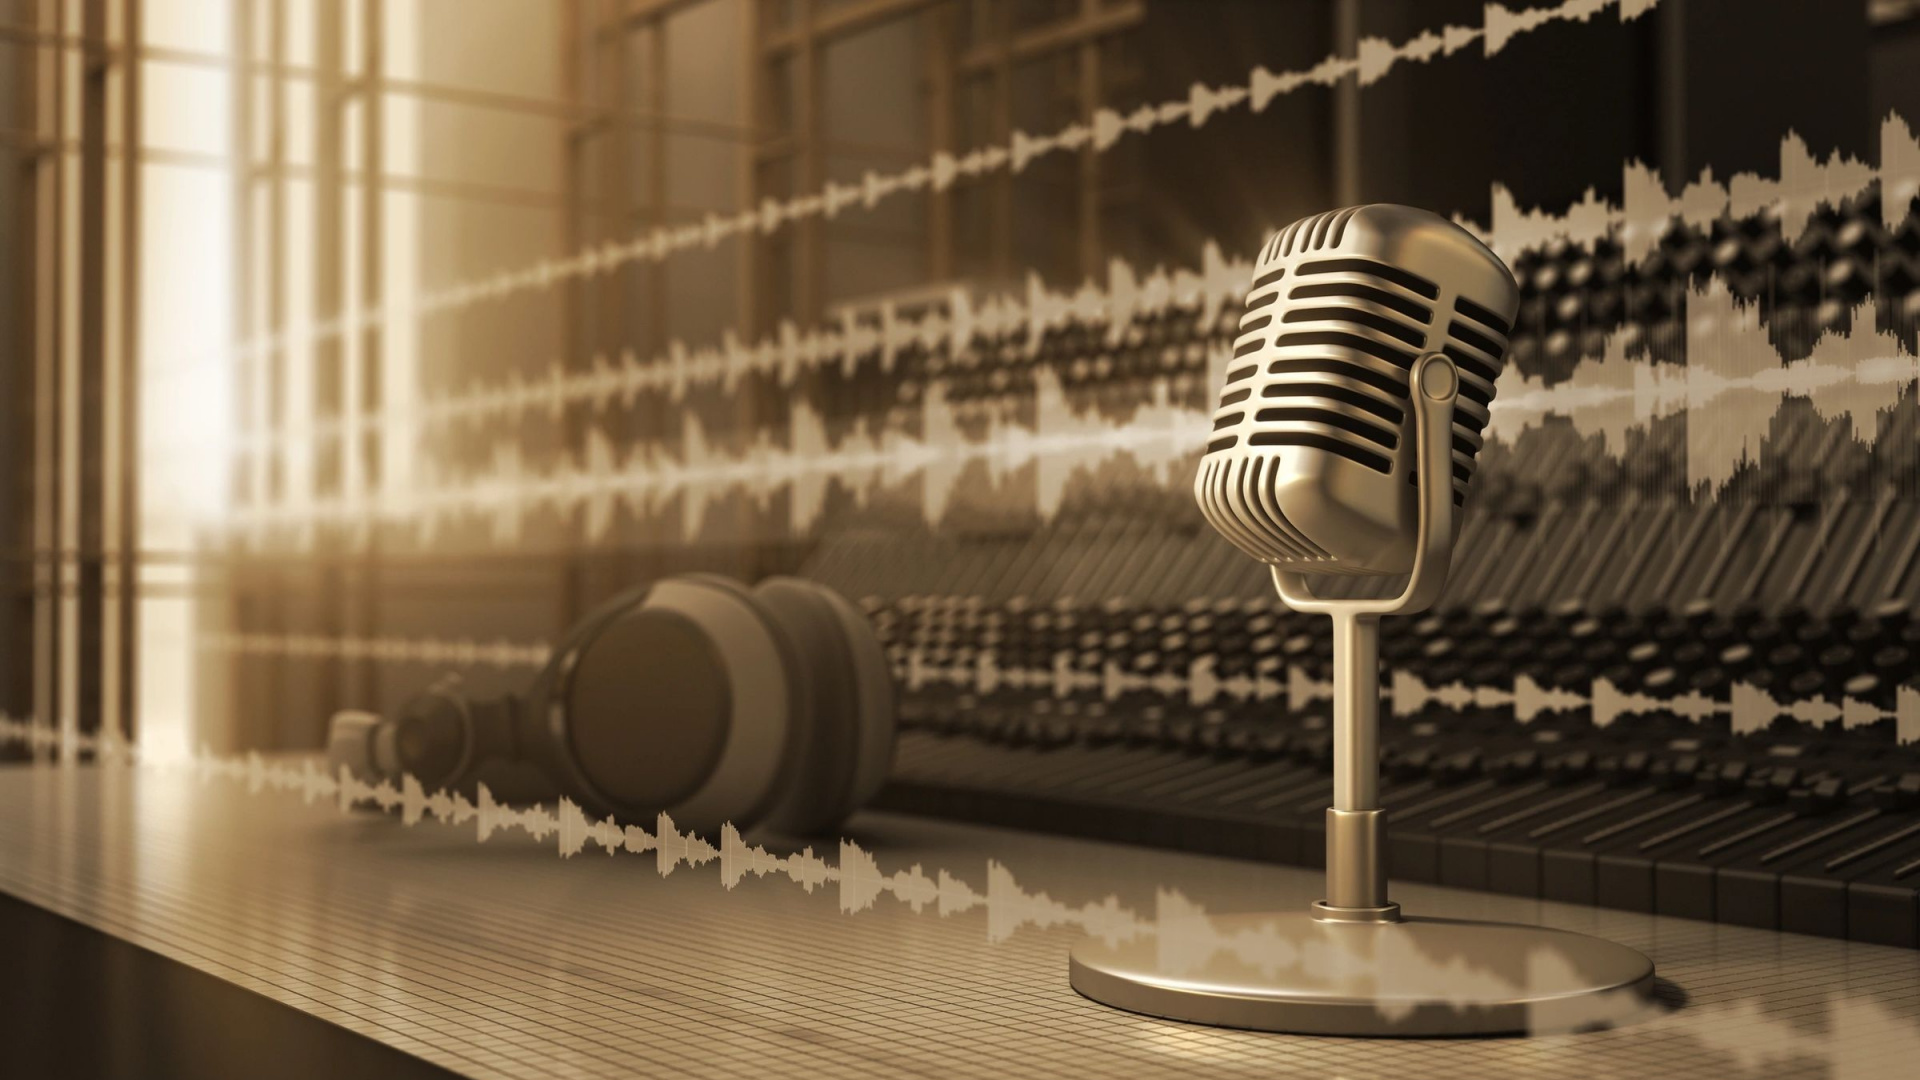 Podcast, Radio, Microphone, Audio Equipment, Recording Studio. Wallpaper in 1920x1080 Resolution